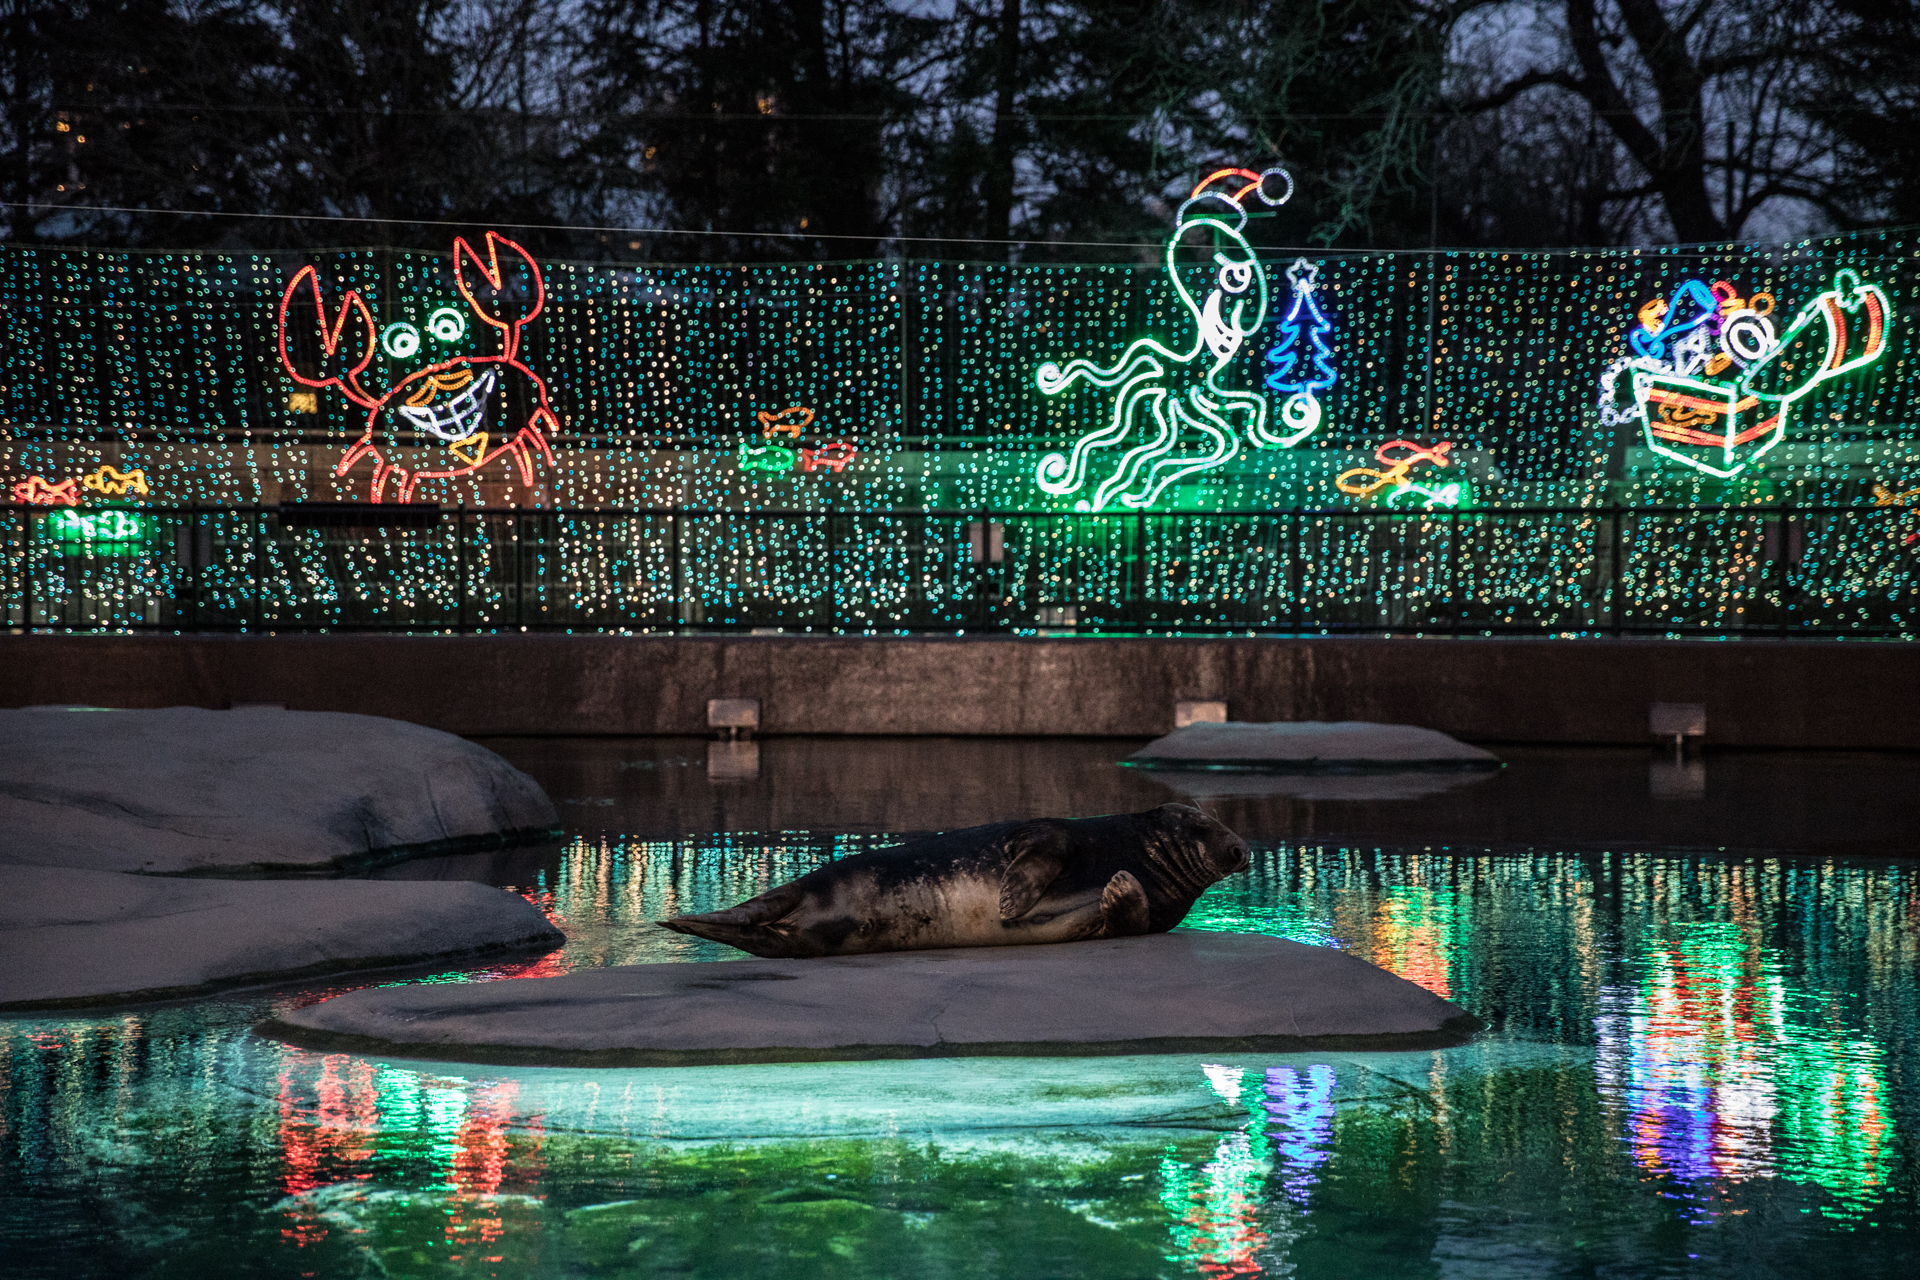 frugter deres Slægtsforskning Take in dazzling Christmas lights at ZooLights this December